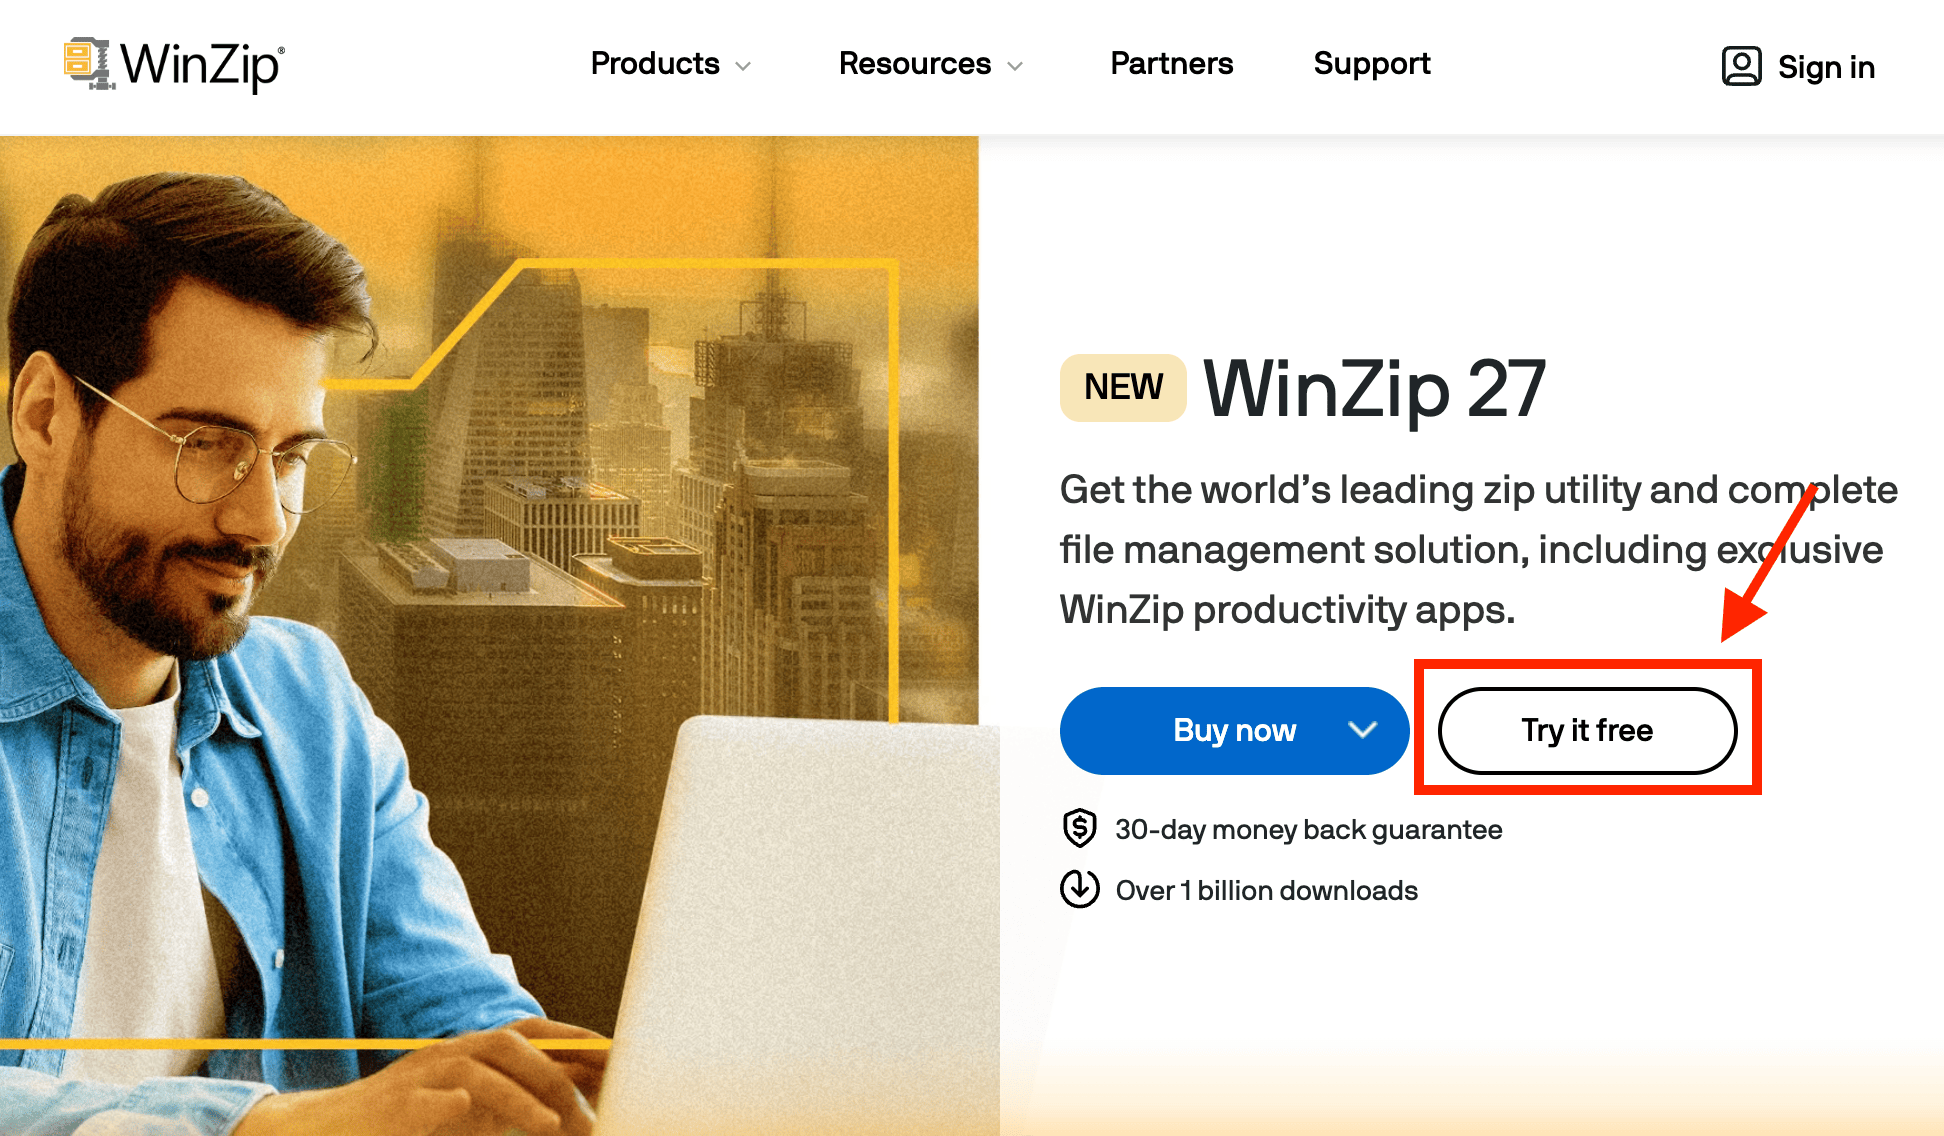 How To Unzip Using WinZip: Step 1